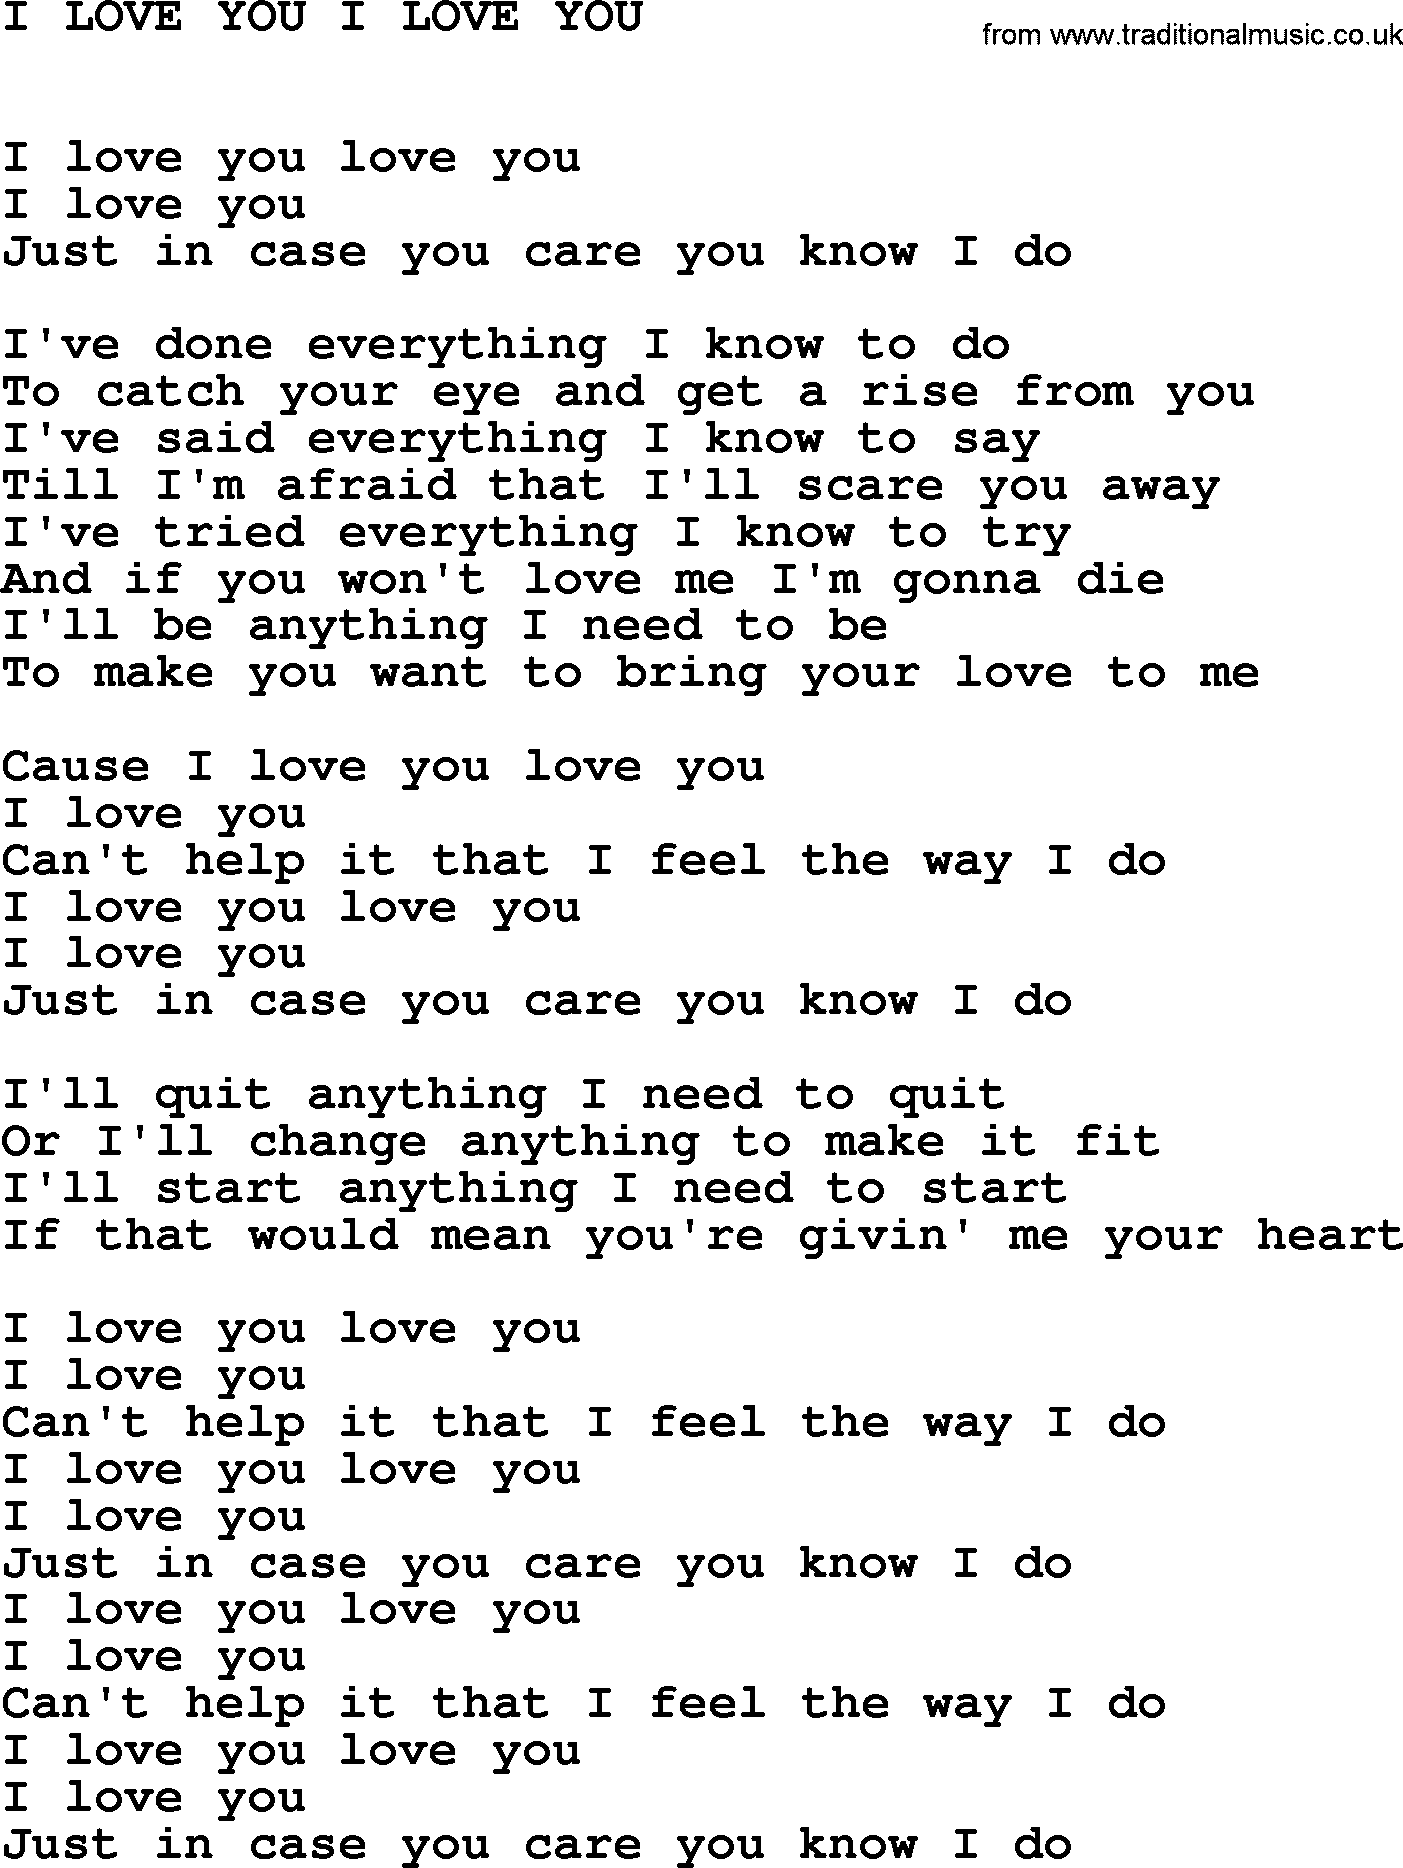 Johnny Cash song I Love You I Love You.txt lyrics